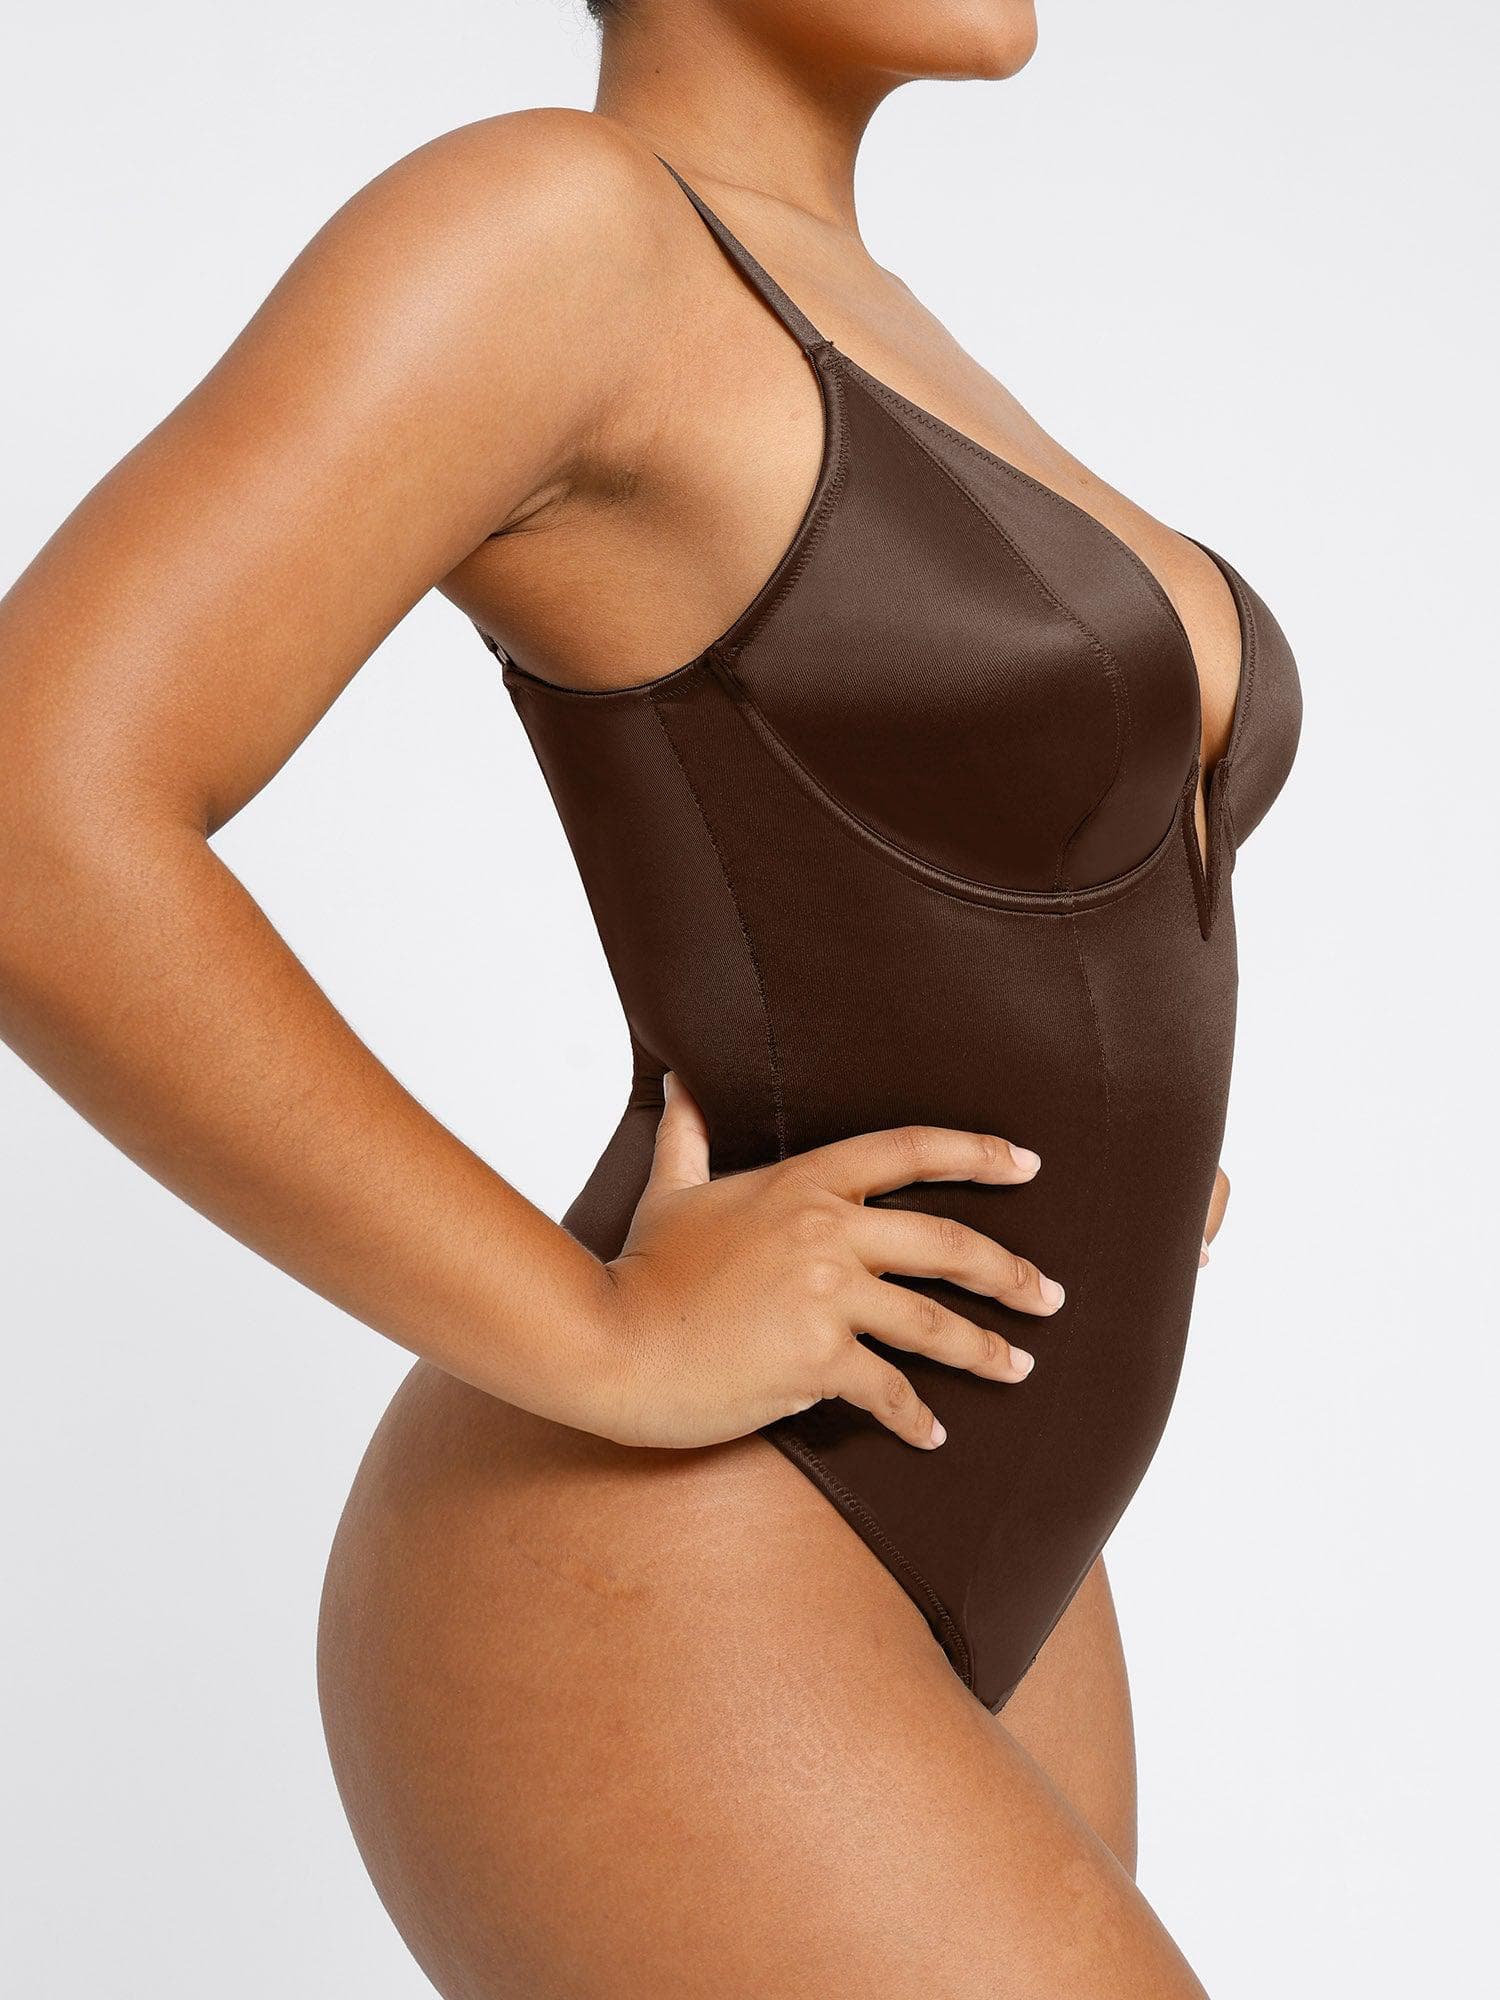 Thong Bodysuit for Women Tummy Control Mock Turtle Neck Body Shaper T Shirt  Body Suit Tops (Color : D, Size : Medium)